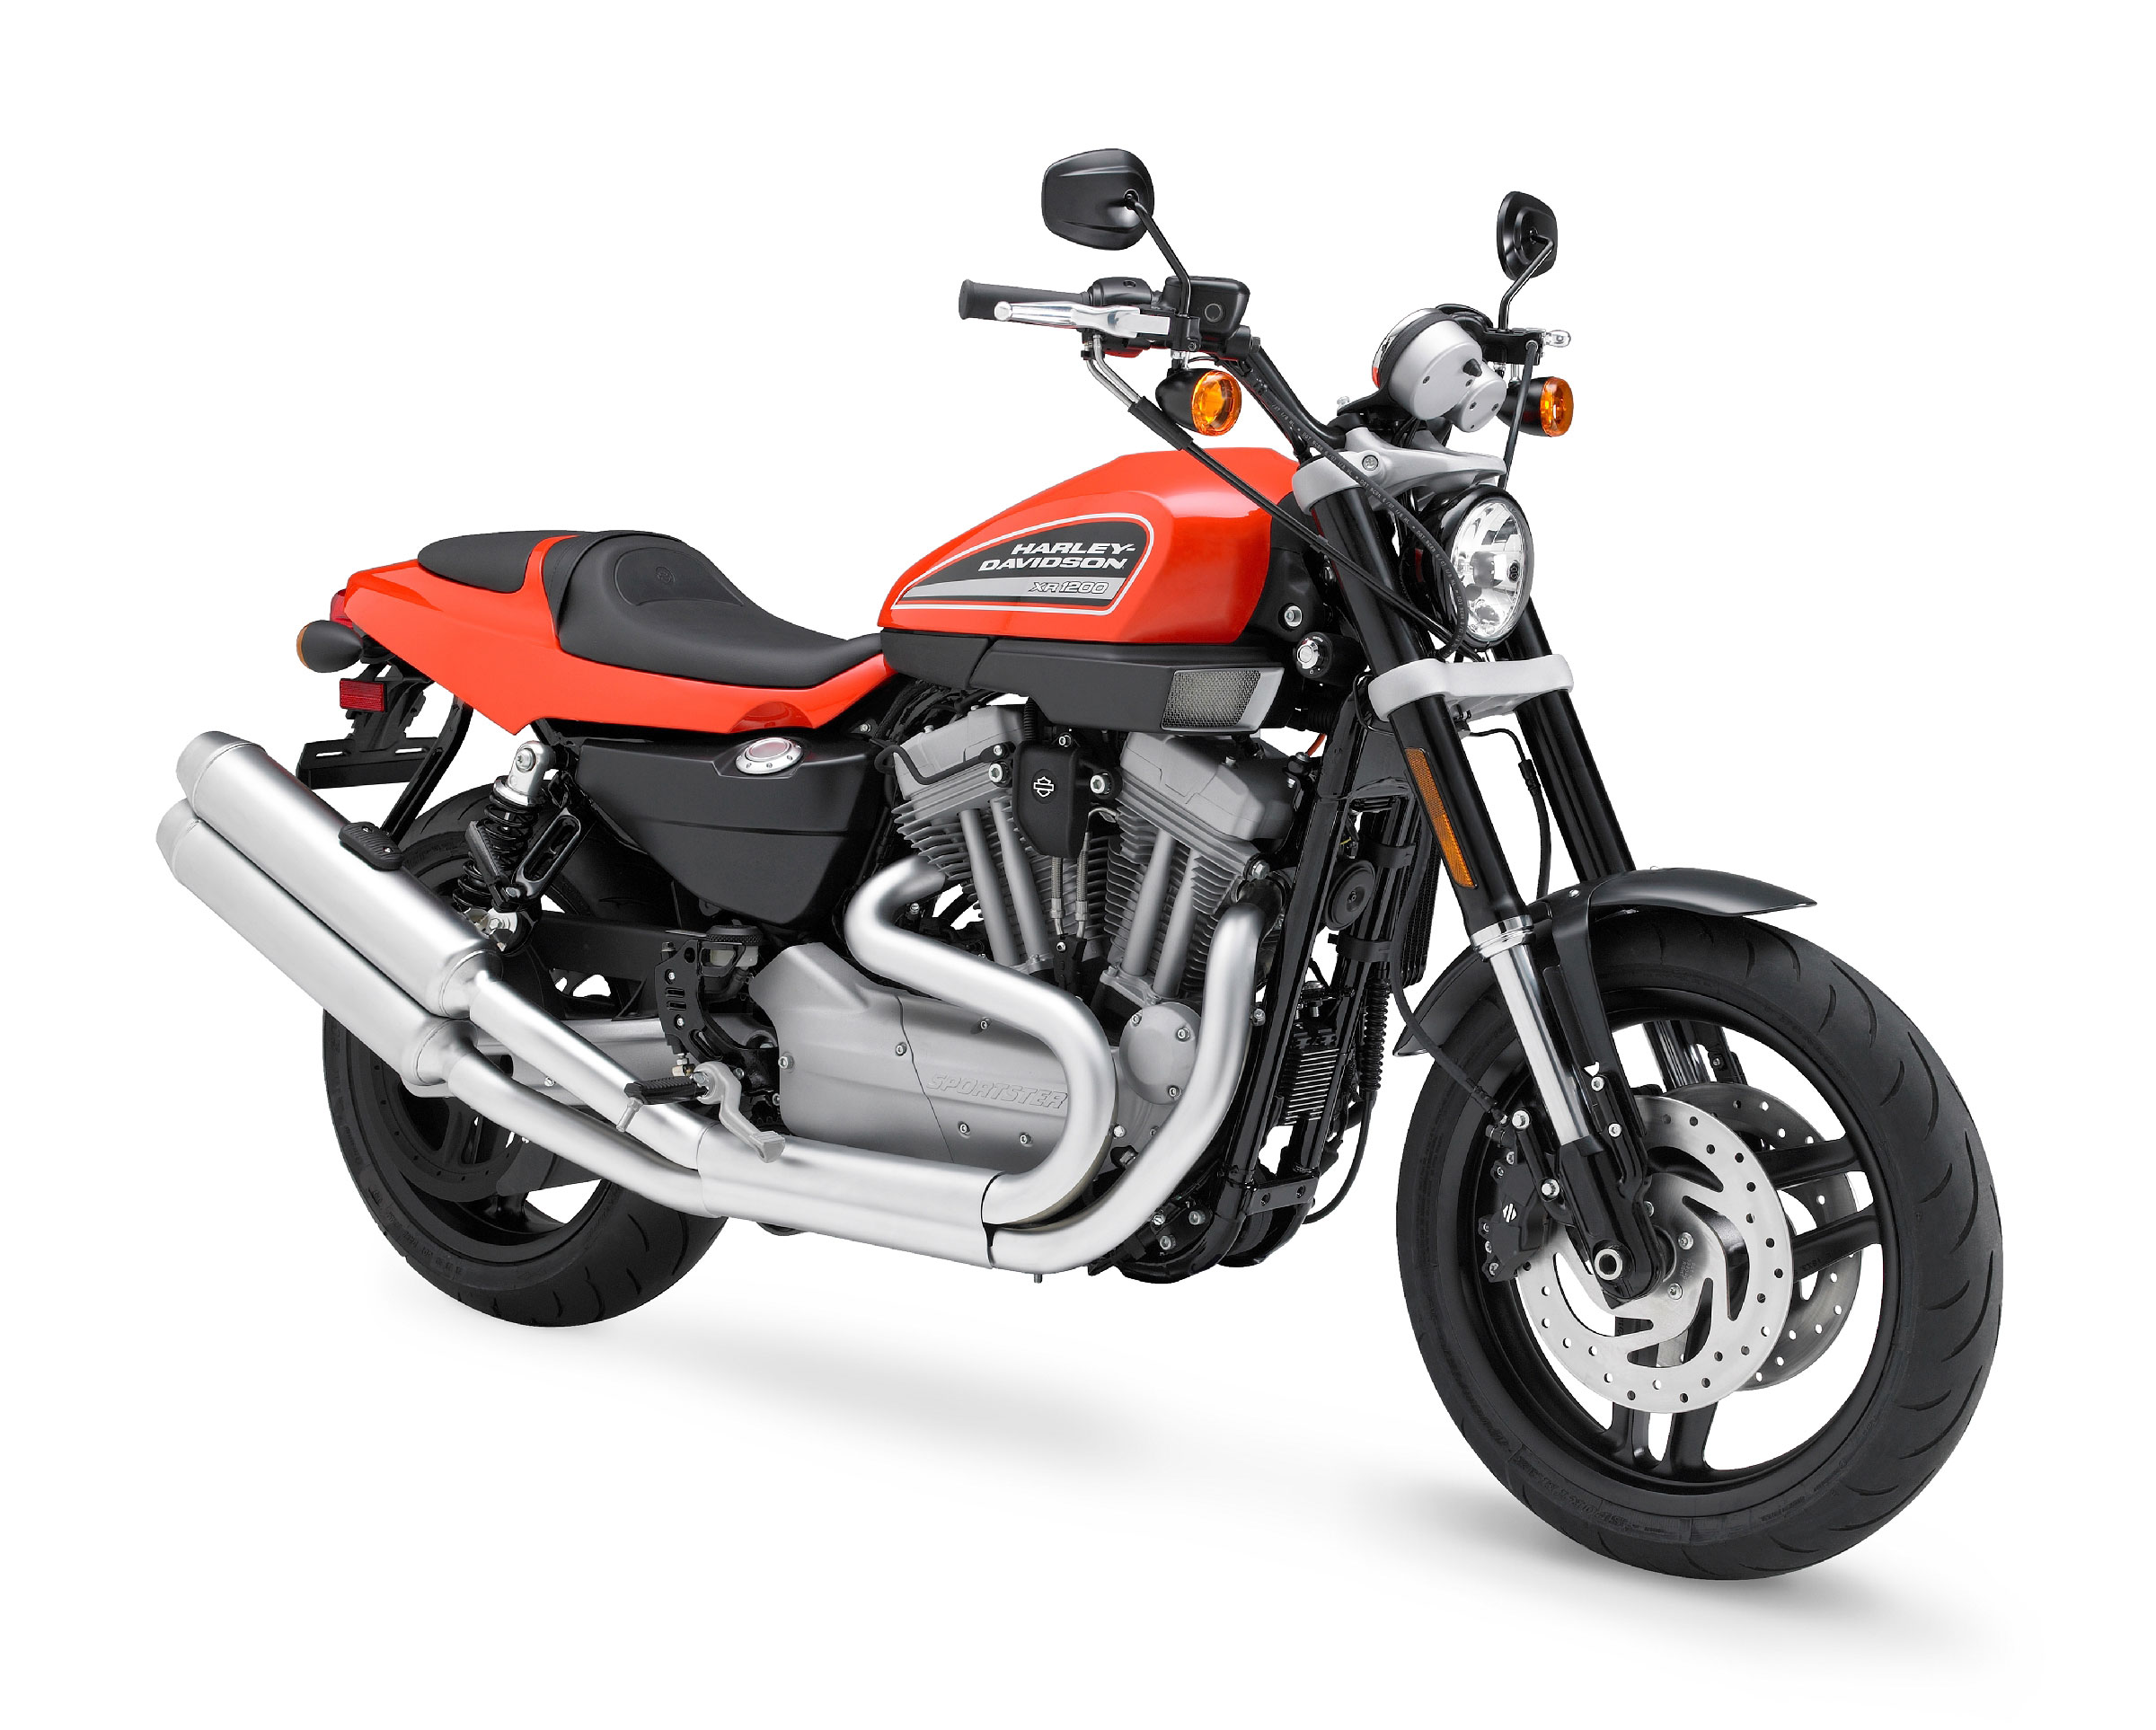 Harley-Davidson XR1200 Backgrounds, Compatible - PC, Mobile, Gadgets| 2400x1926 px